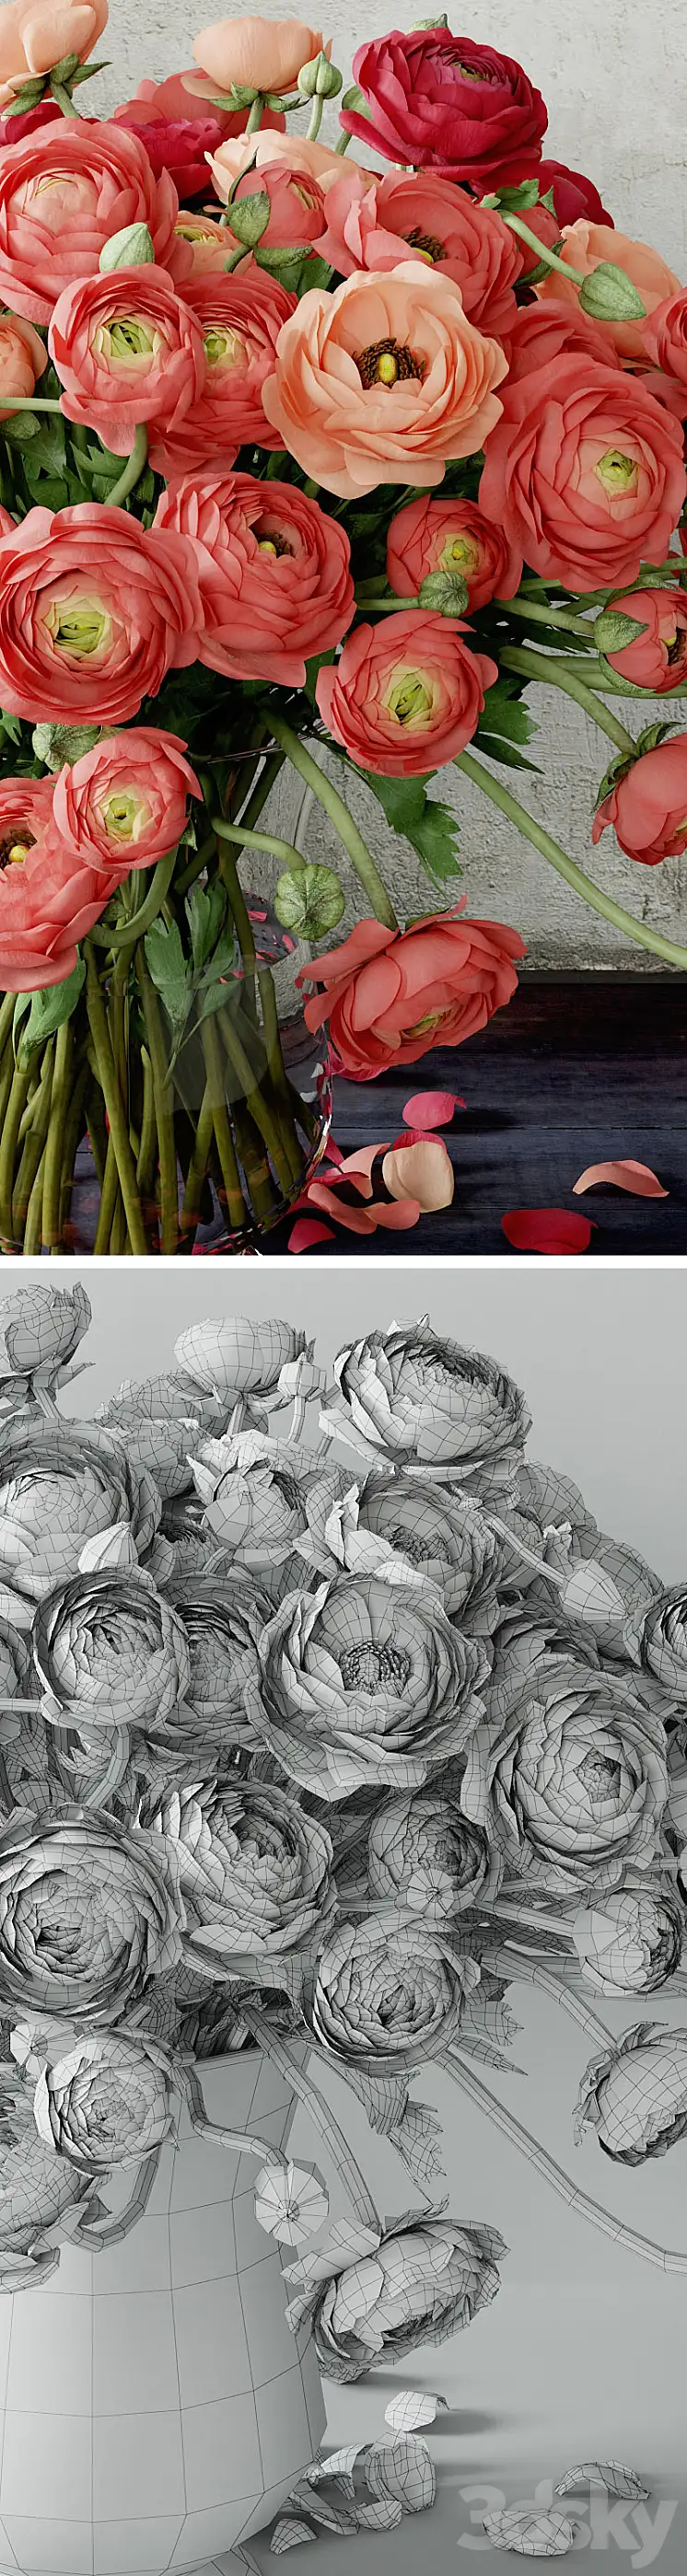 مدل سه بعدی گلدان گل مدرن 14 - 6